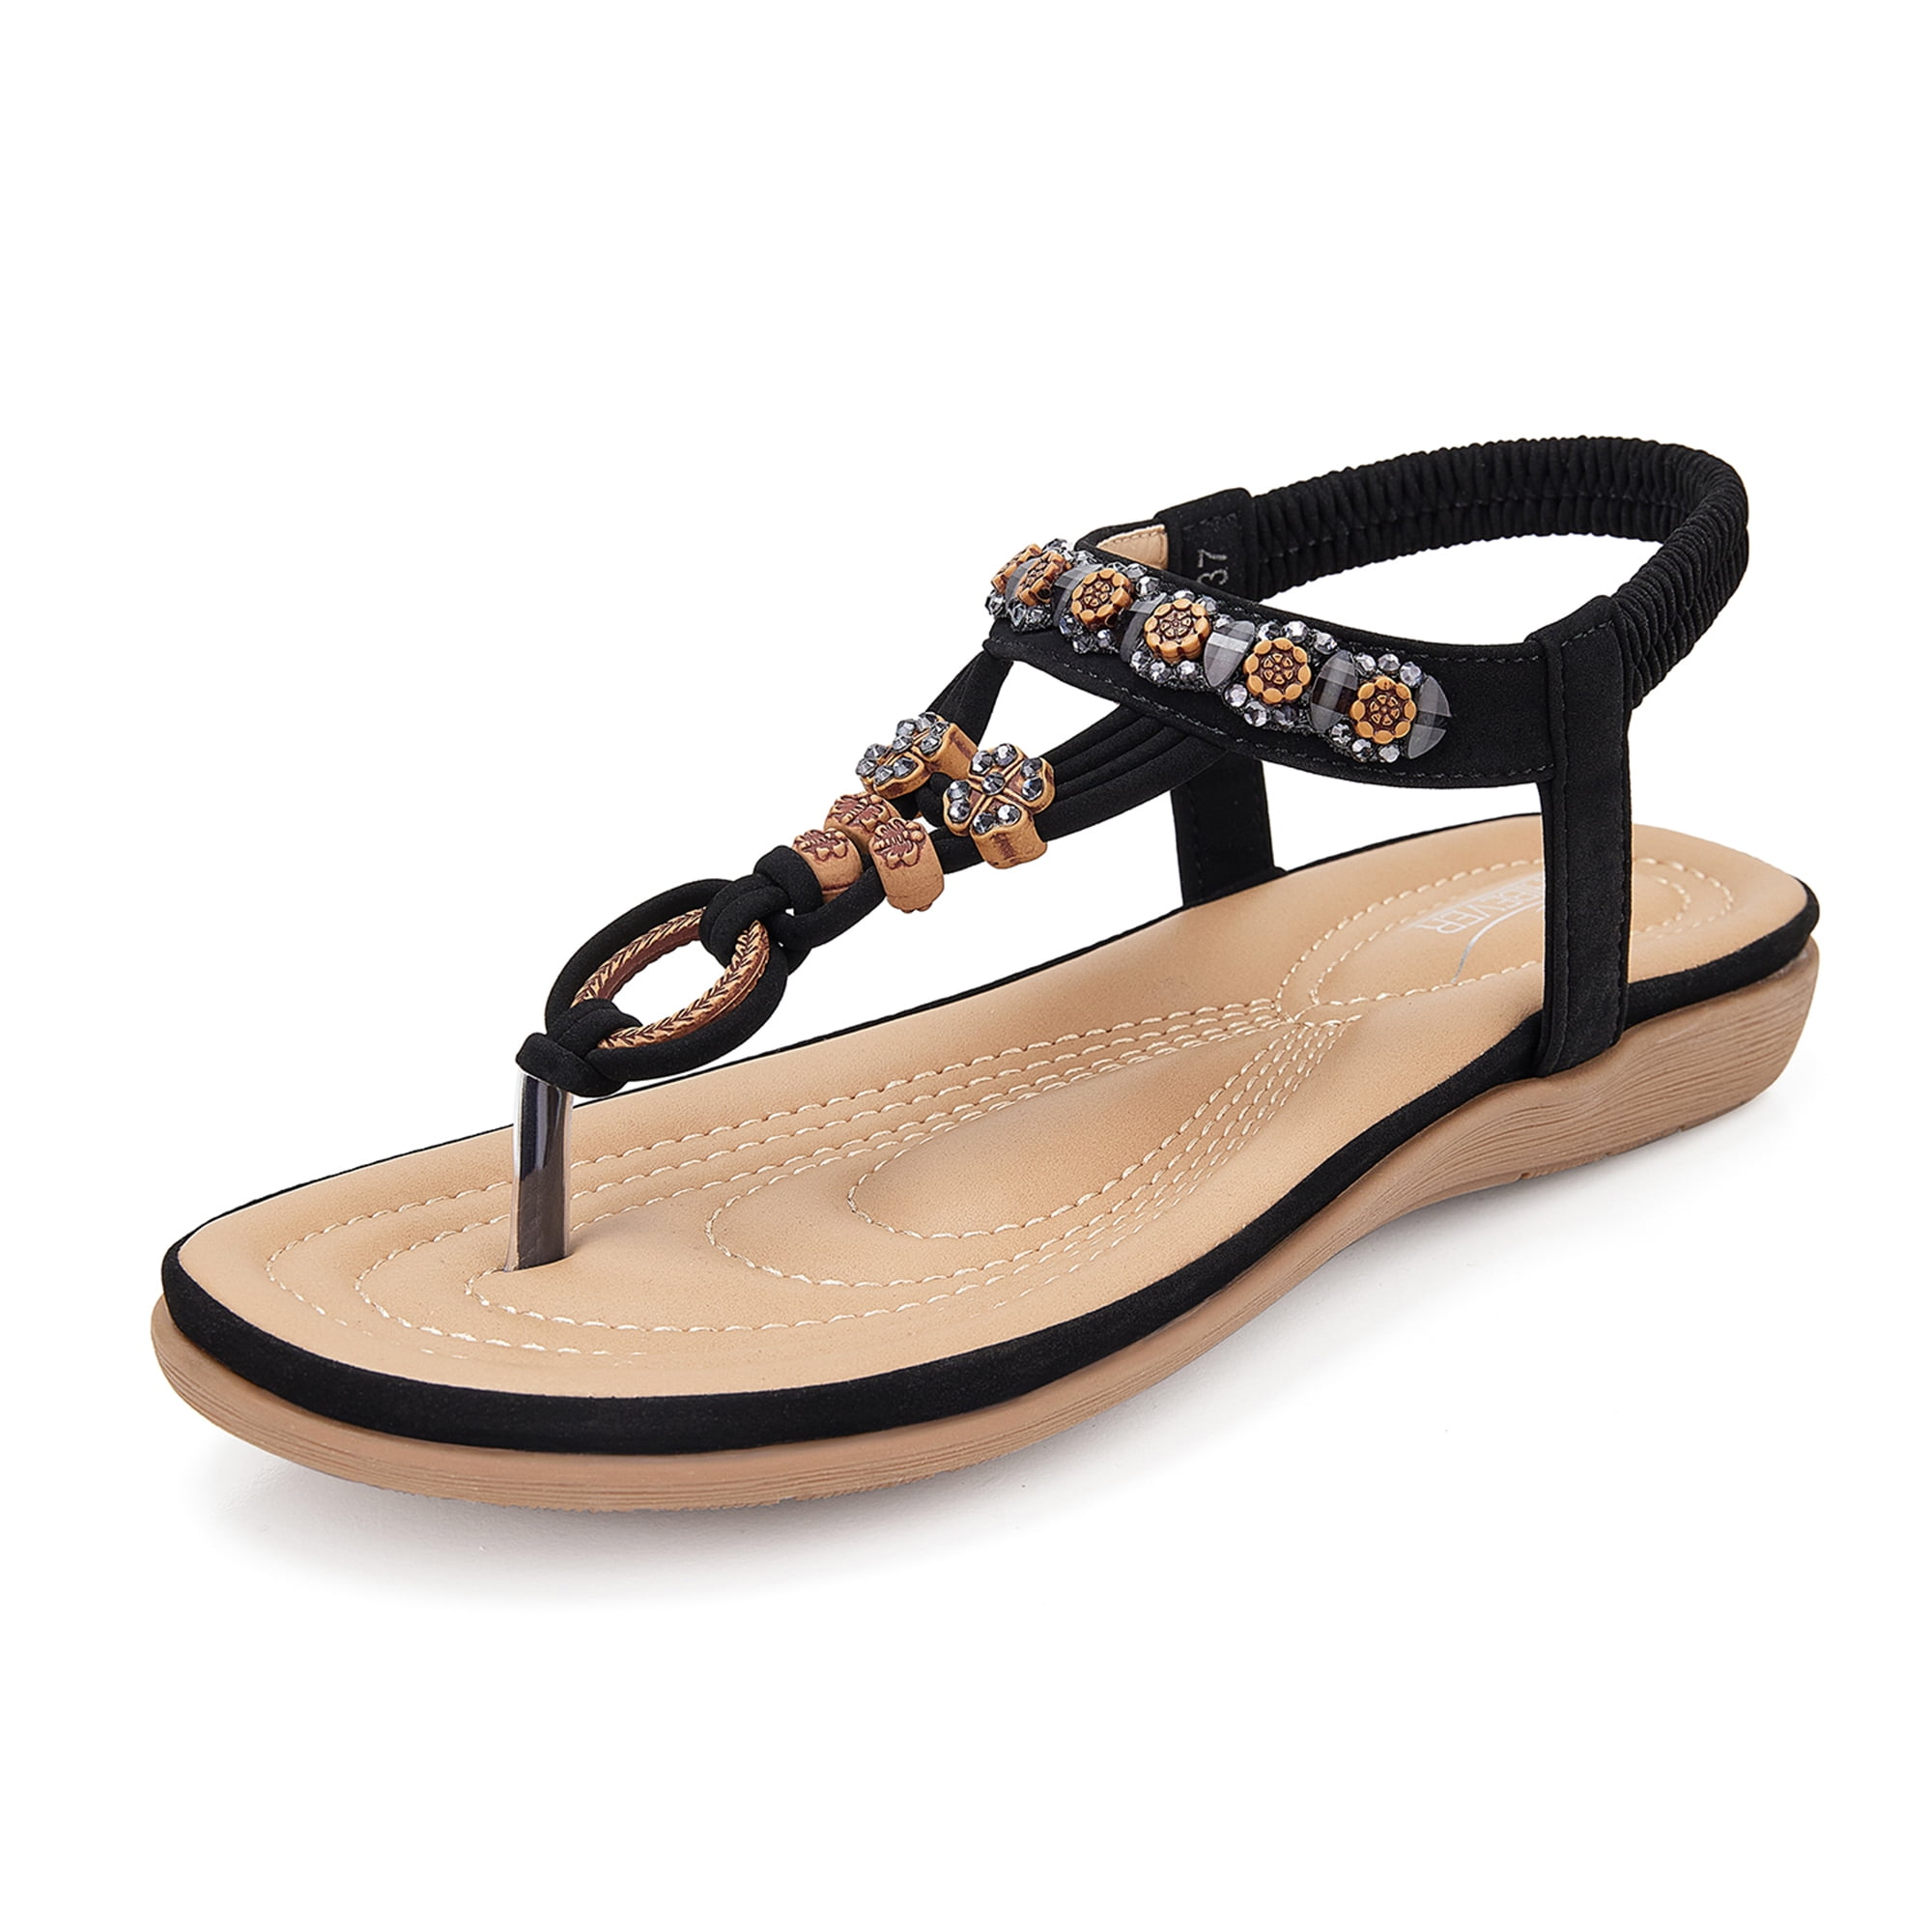 Sandals for Women Summer Beaded Flat Sandal Comfortable T Strap Flip Flop Shoes Brown - Walmart.com